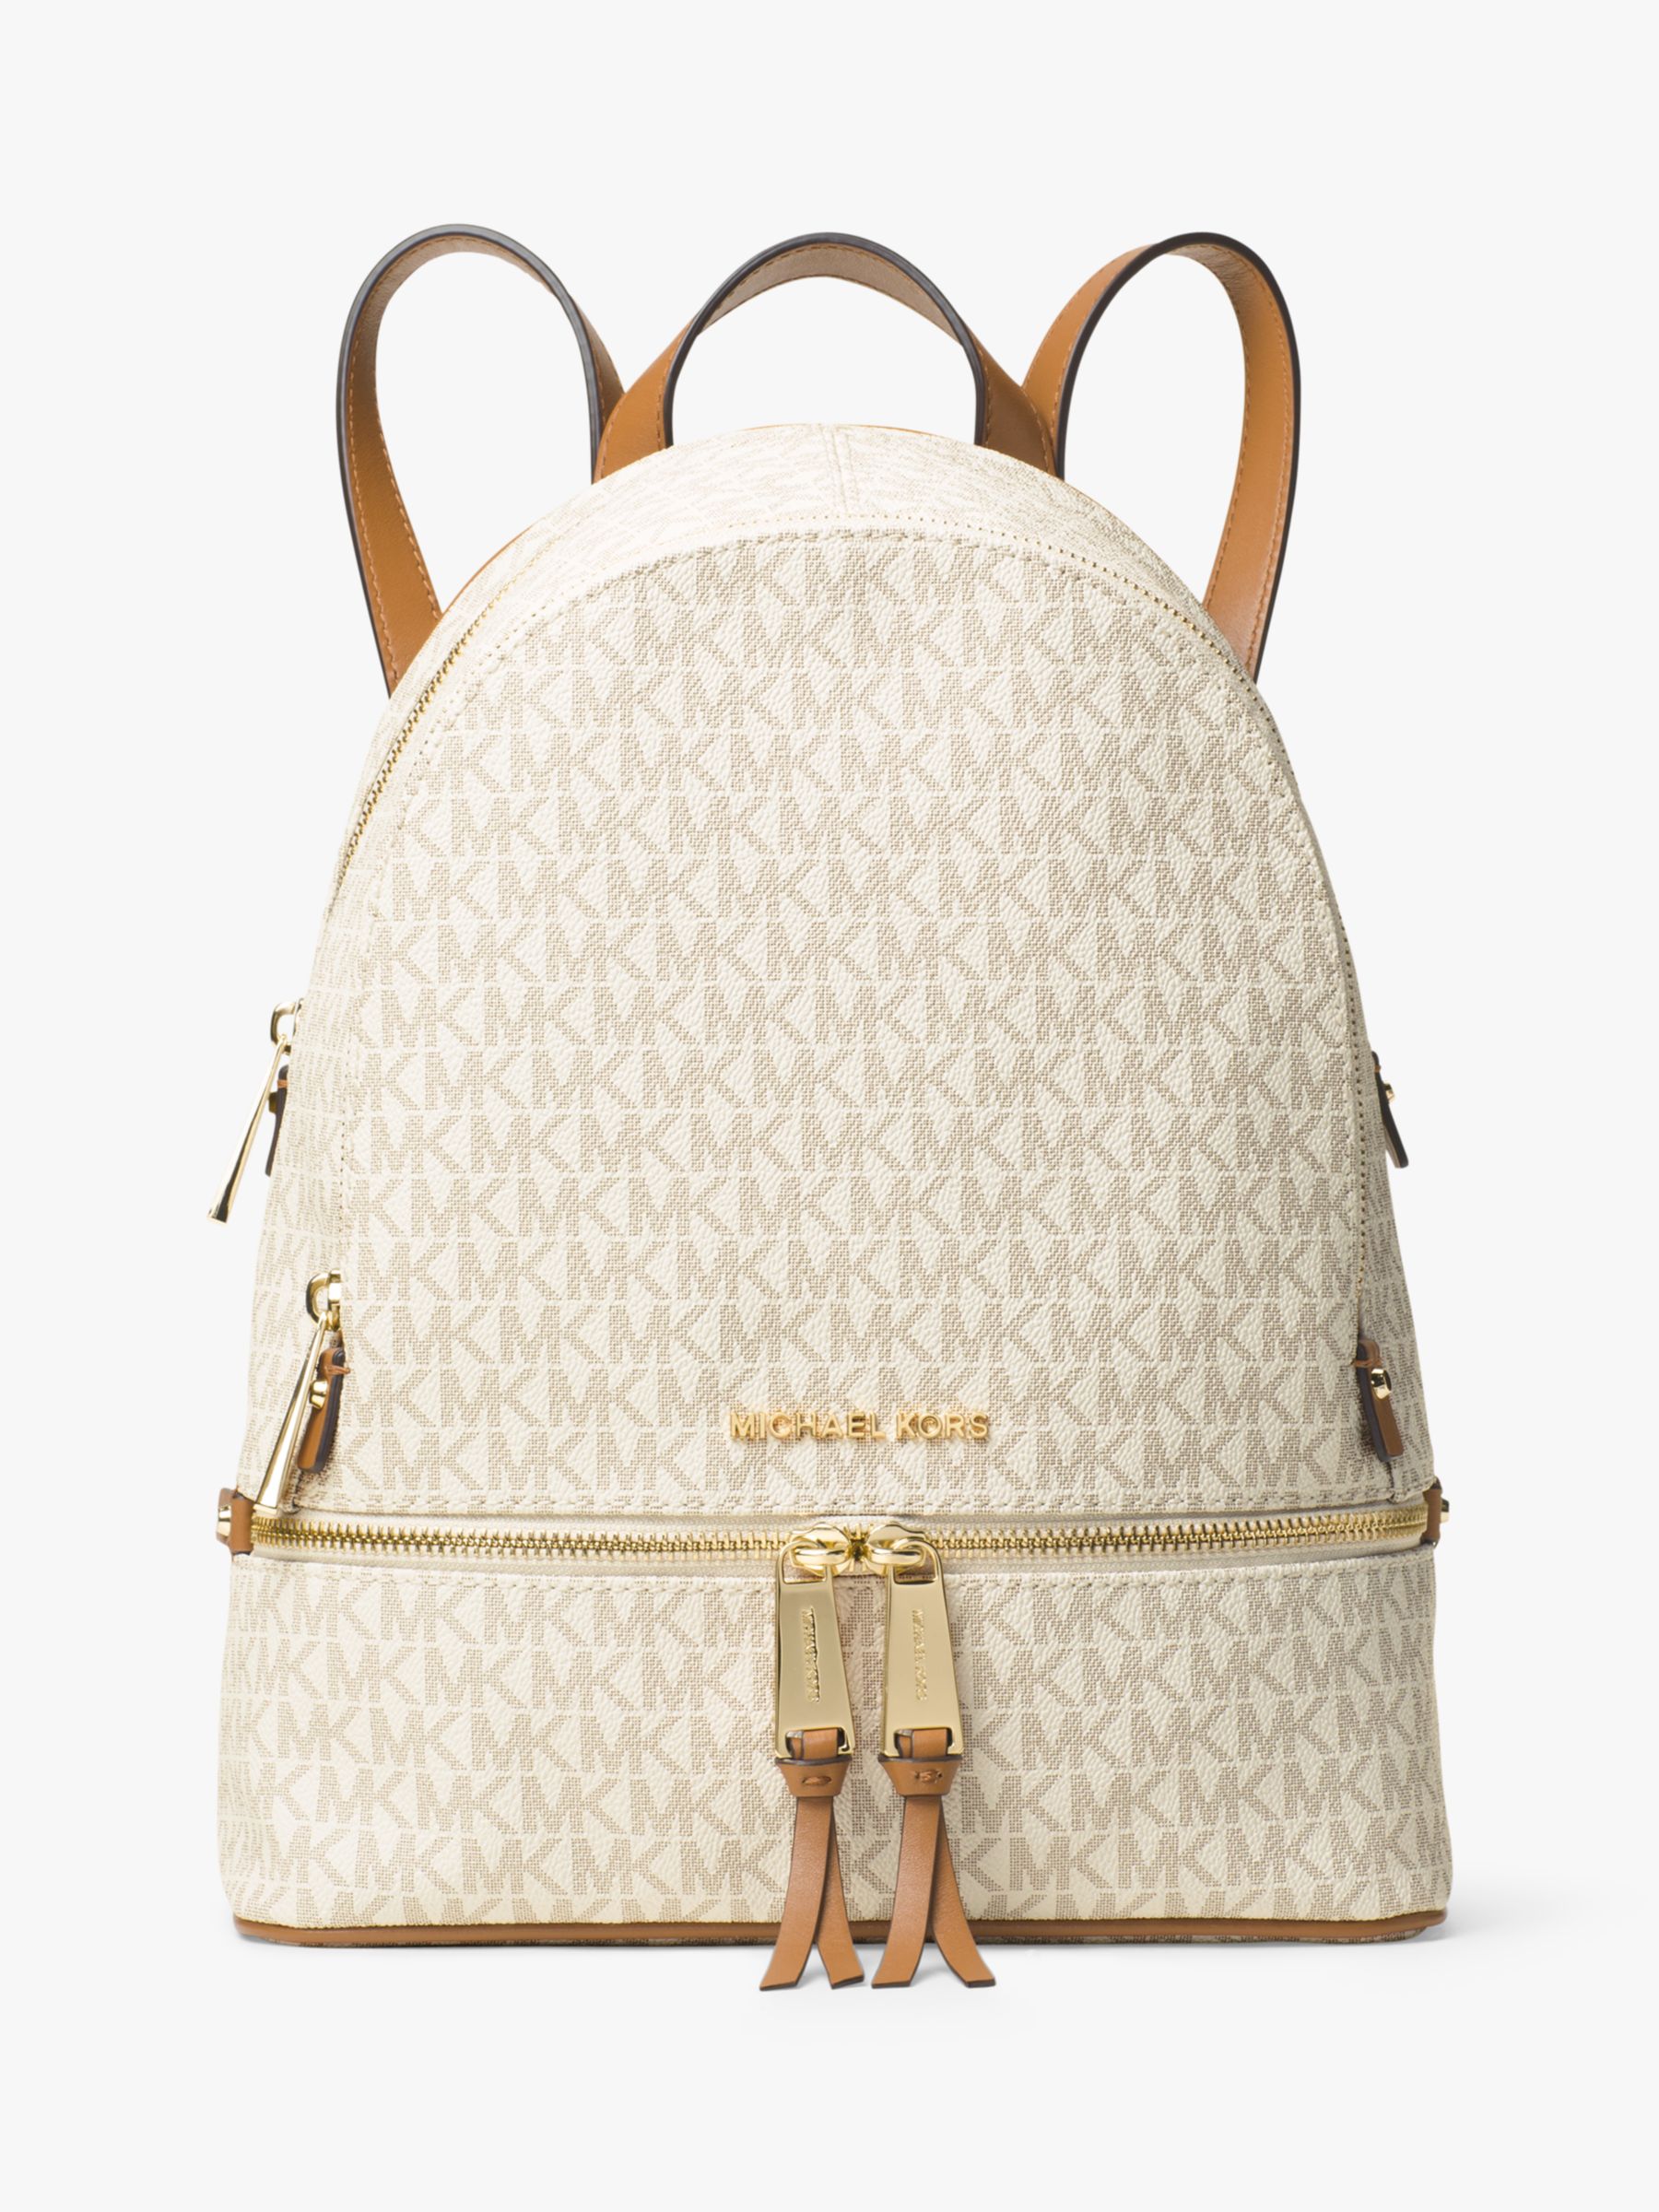 vanilla michael kors backpack